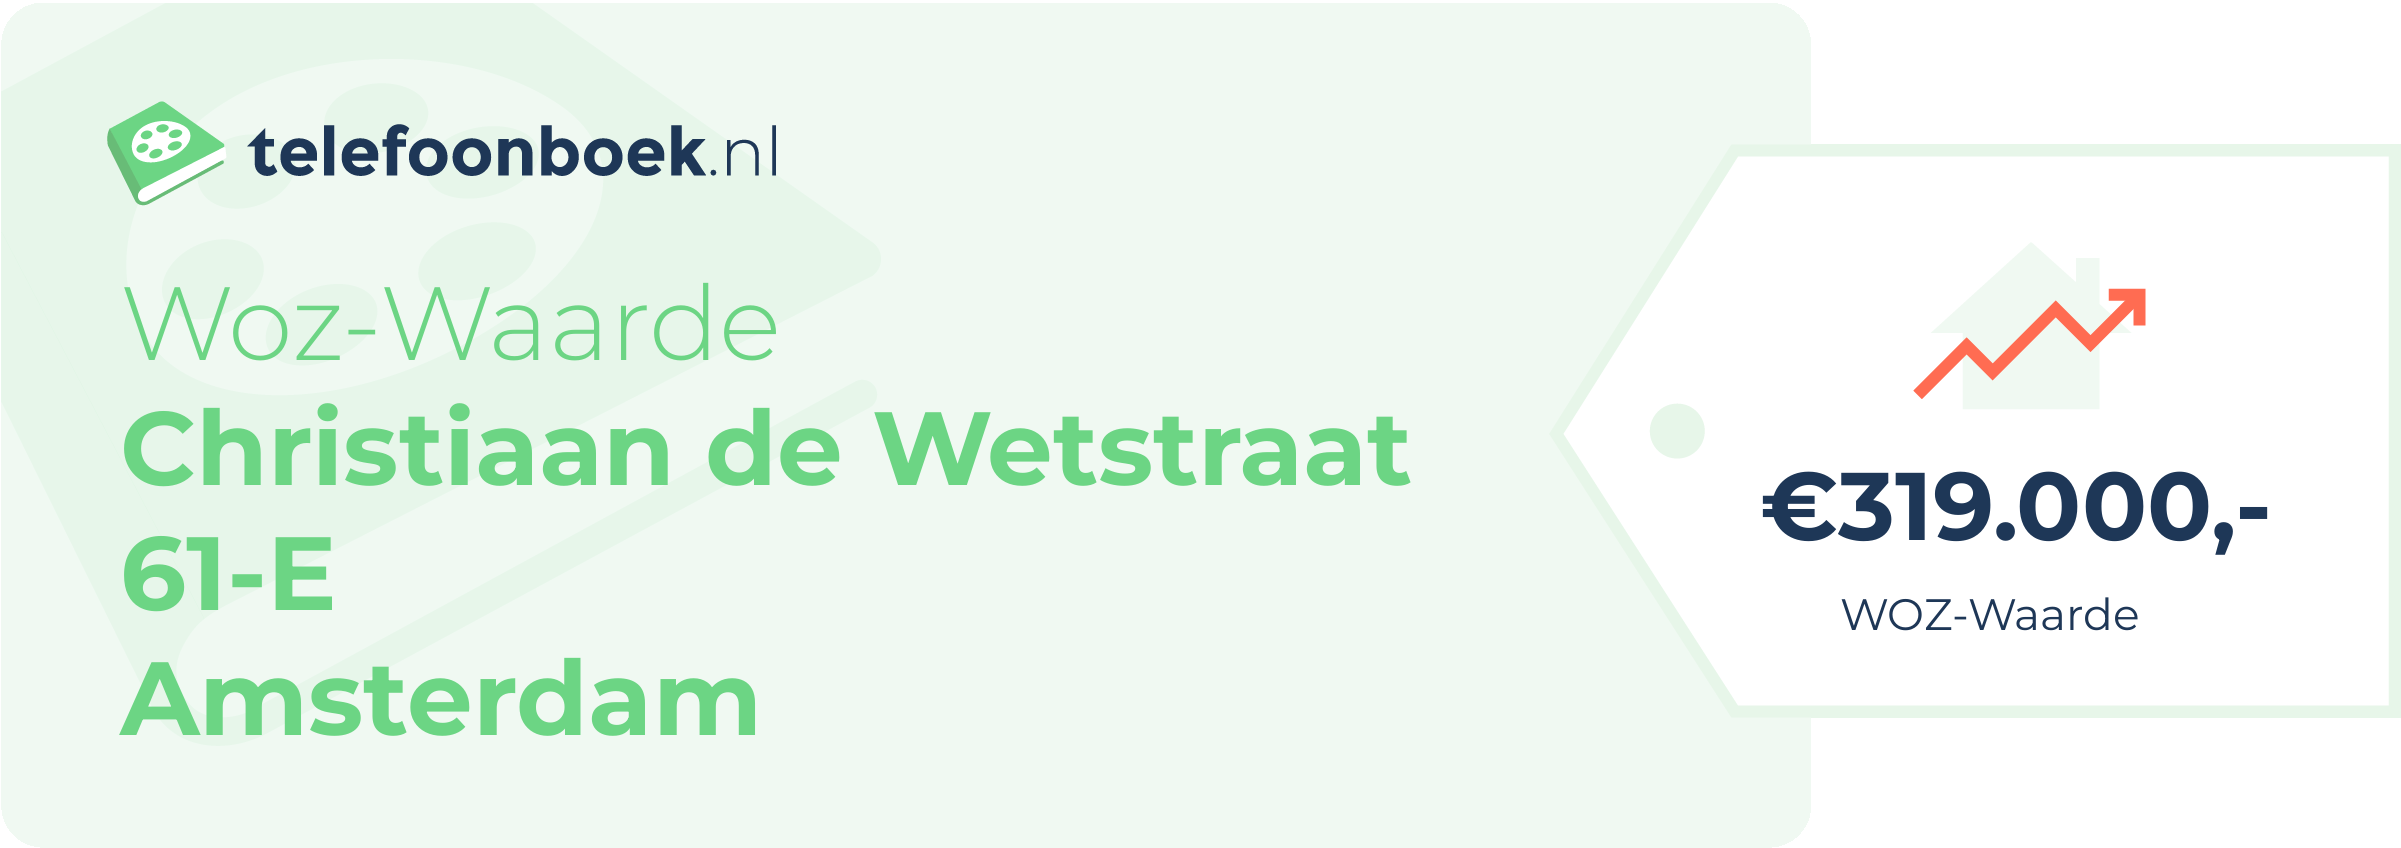 WOZ-waarde Christiaan De Wetstraat 61-E Amsterdam